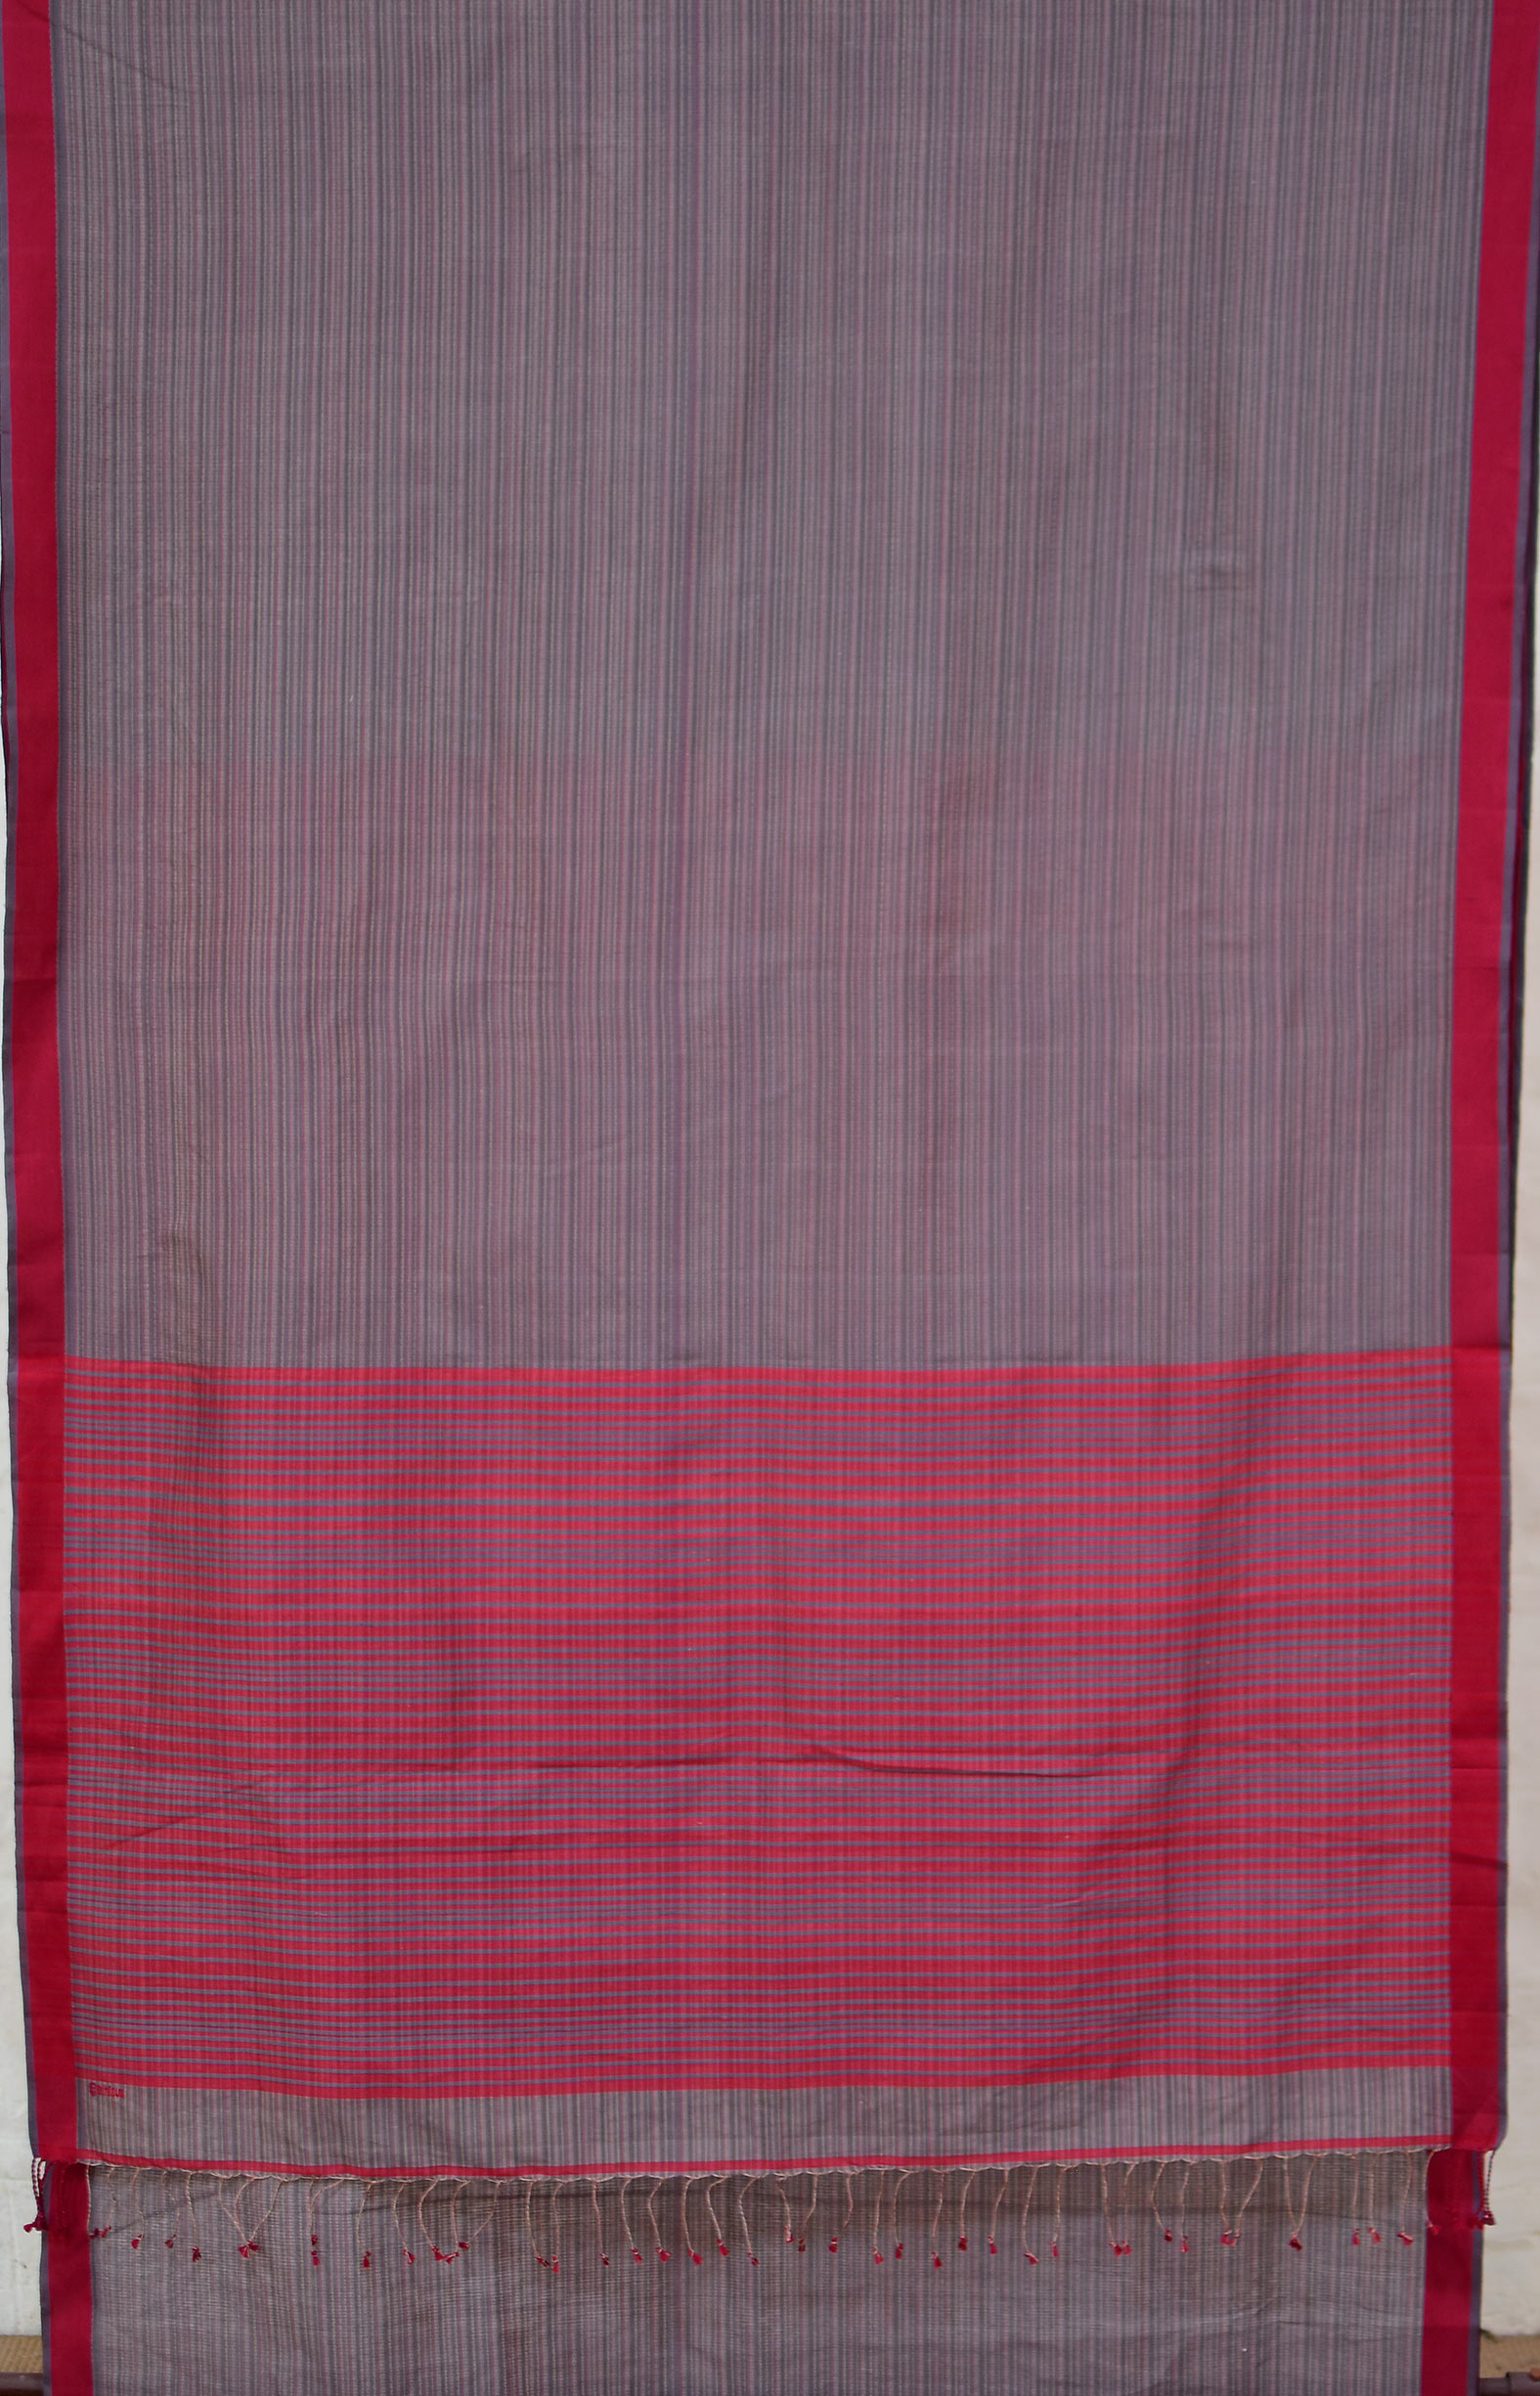 Greyish Brown, Handwoven Organic Cotton, Textured Weave , Jacquard, Work Wear, Striped Saree